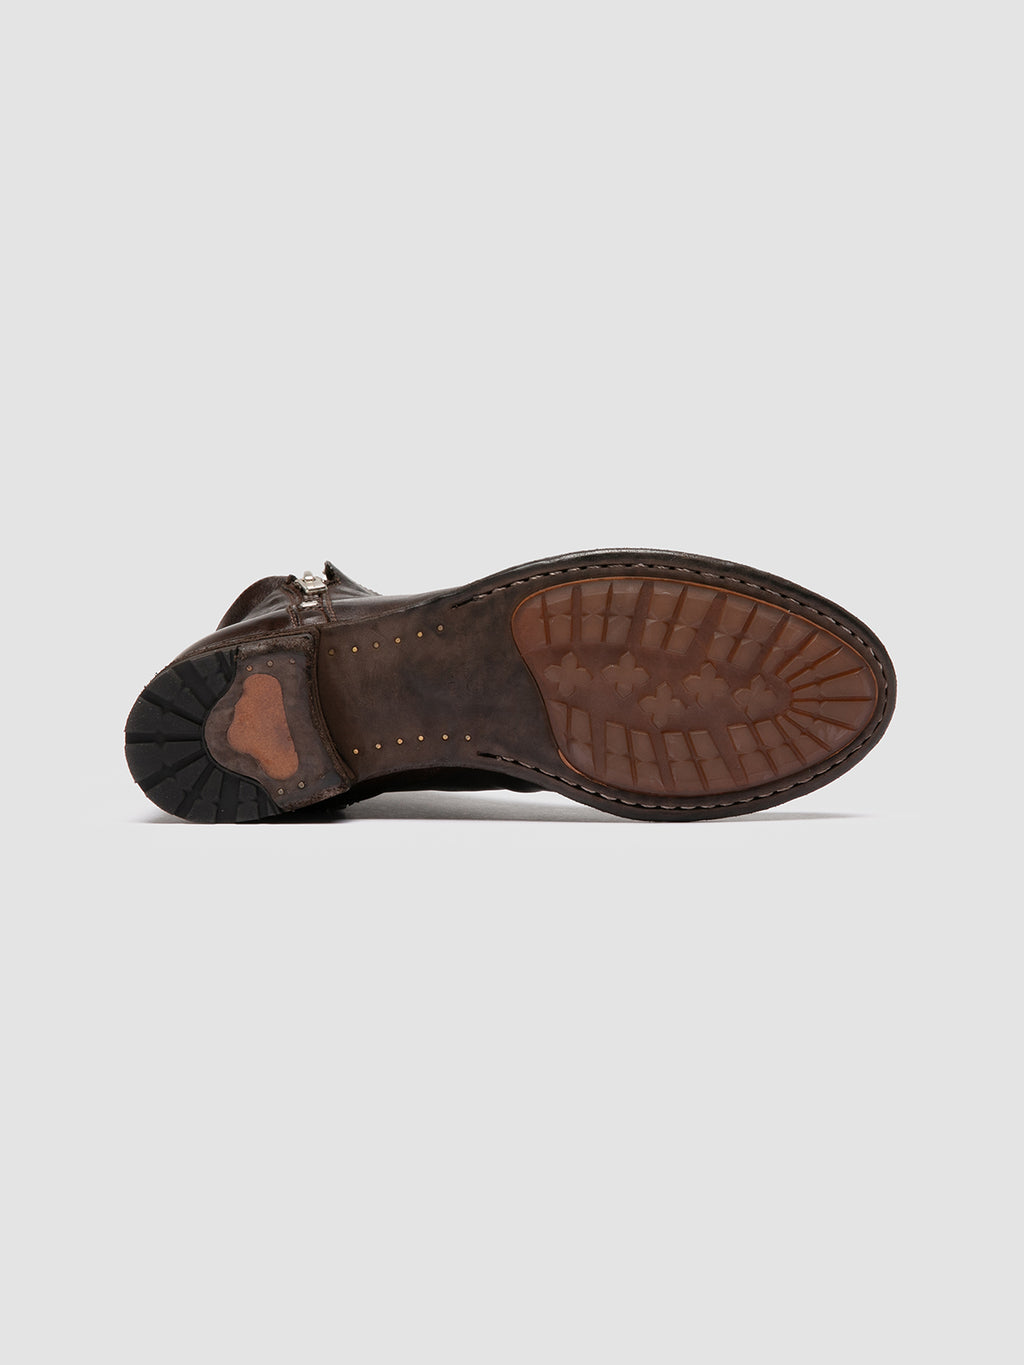 LEXIKON 097 - Brown Leather Booties